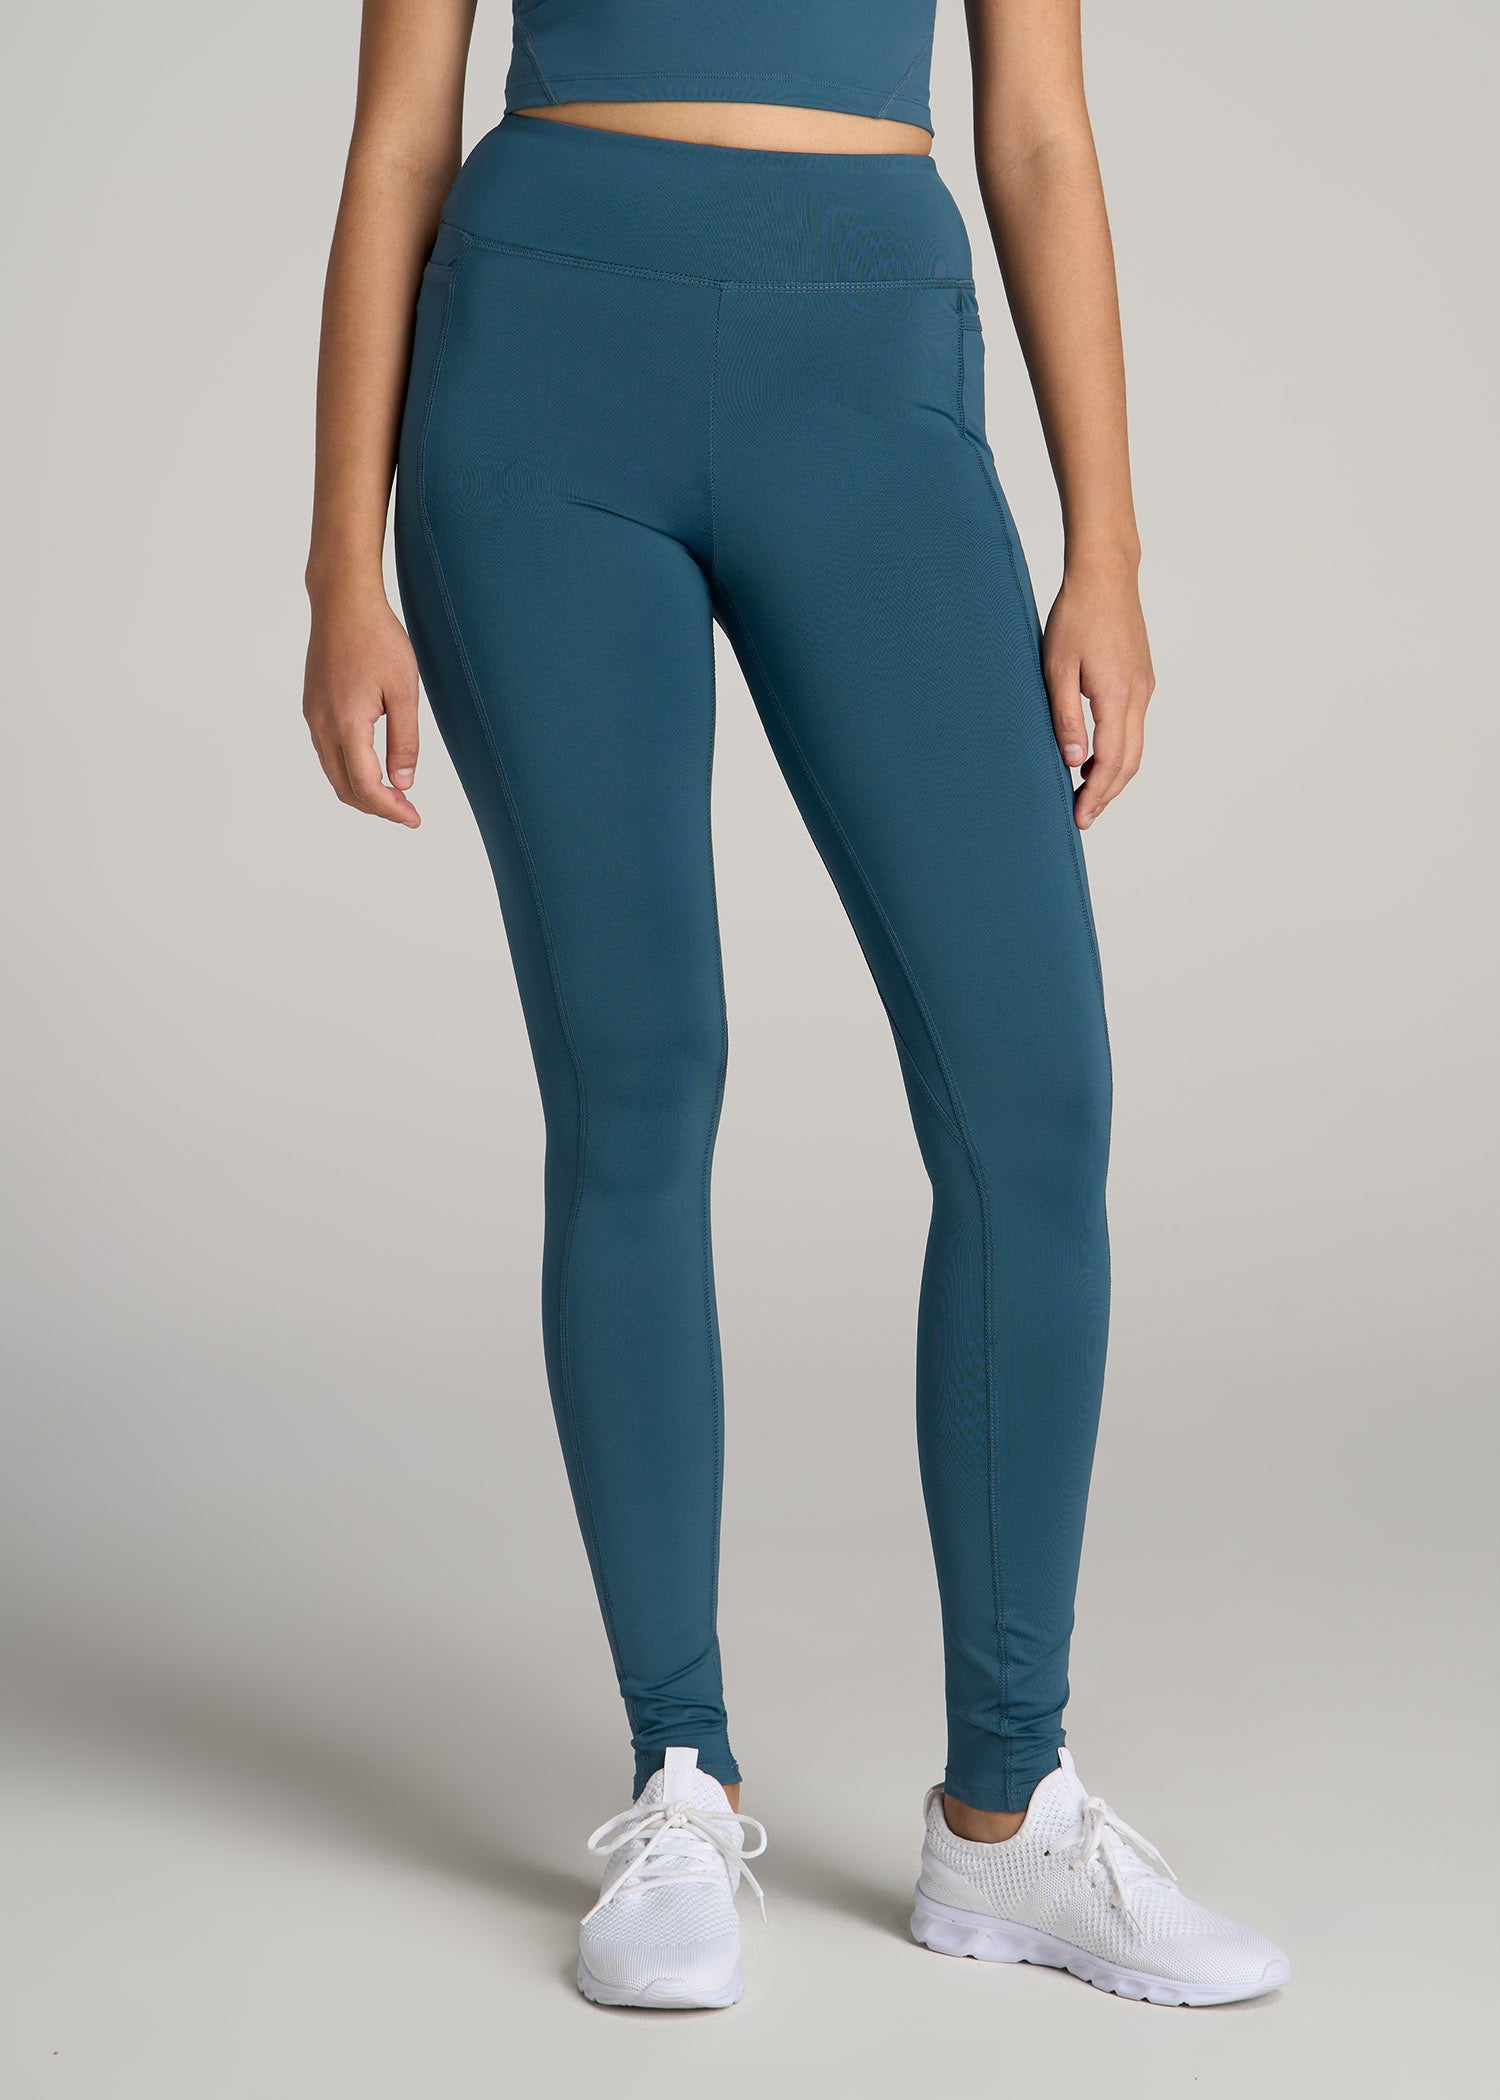 Lululemon Athletica Women's Gray Nylon Pants Size 10 - $39 - From